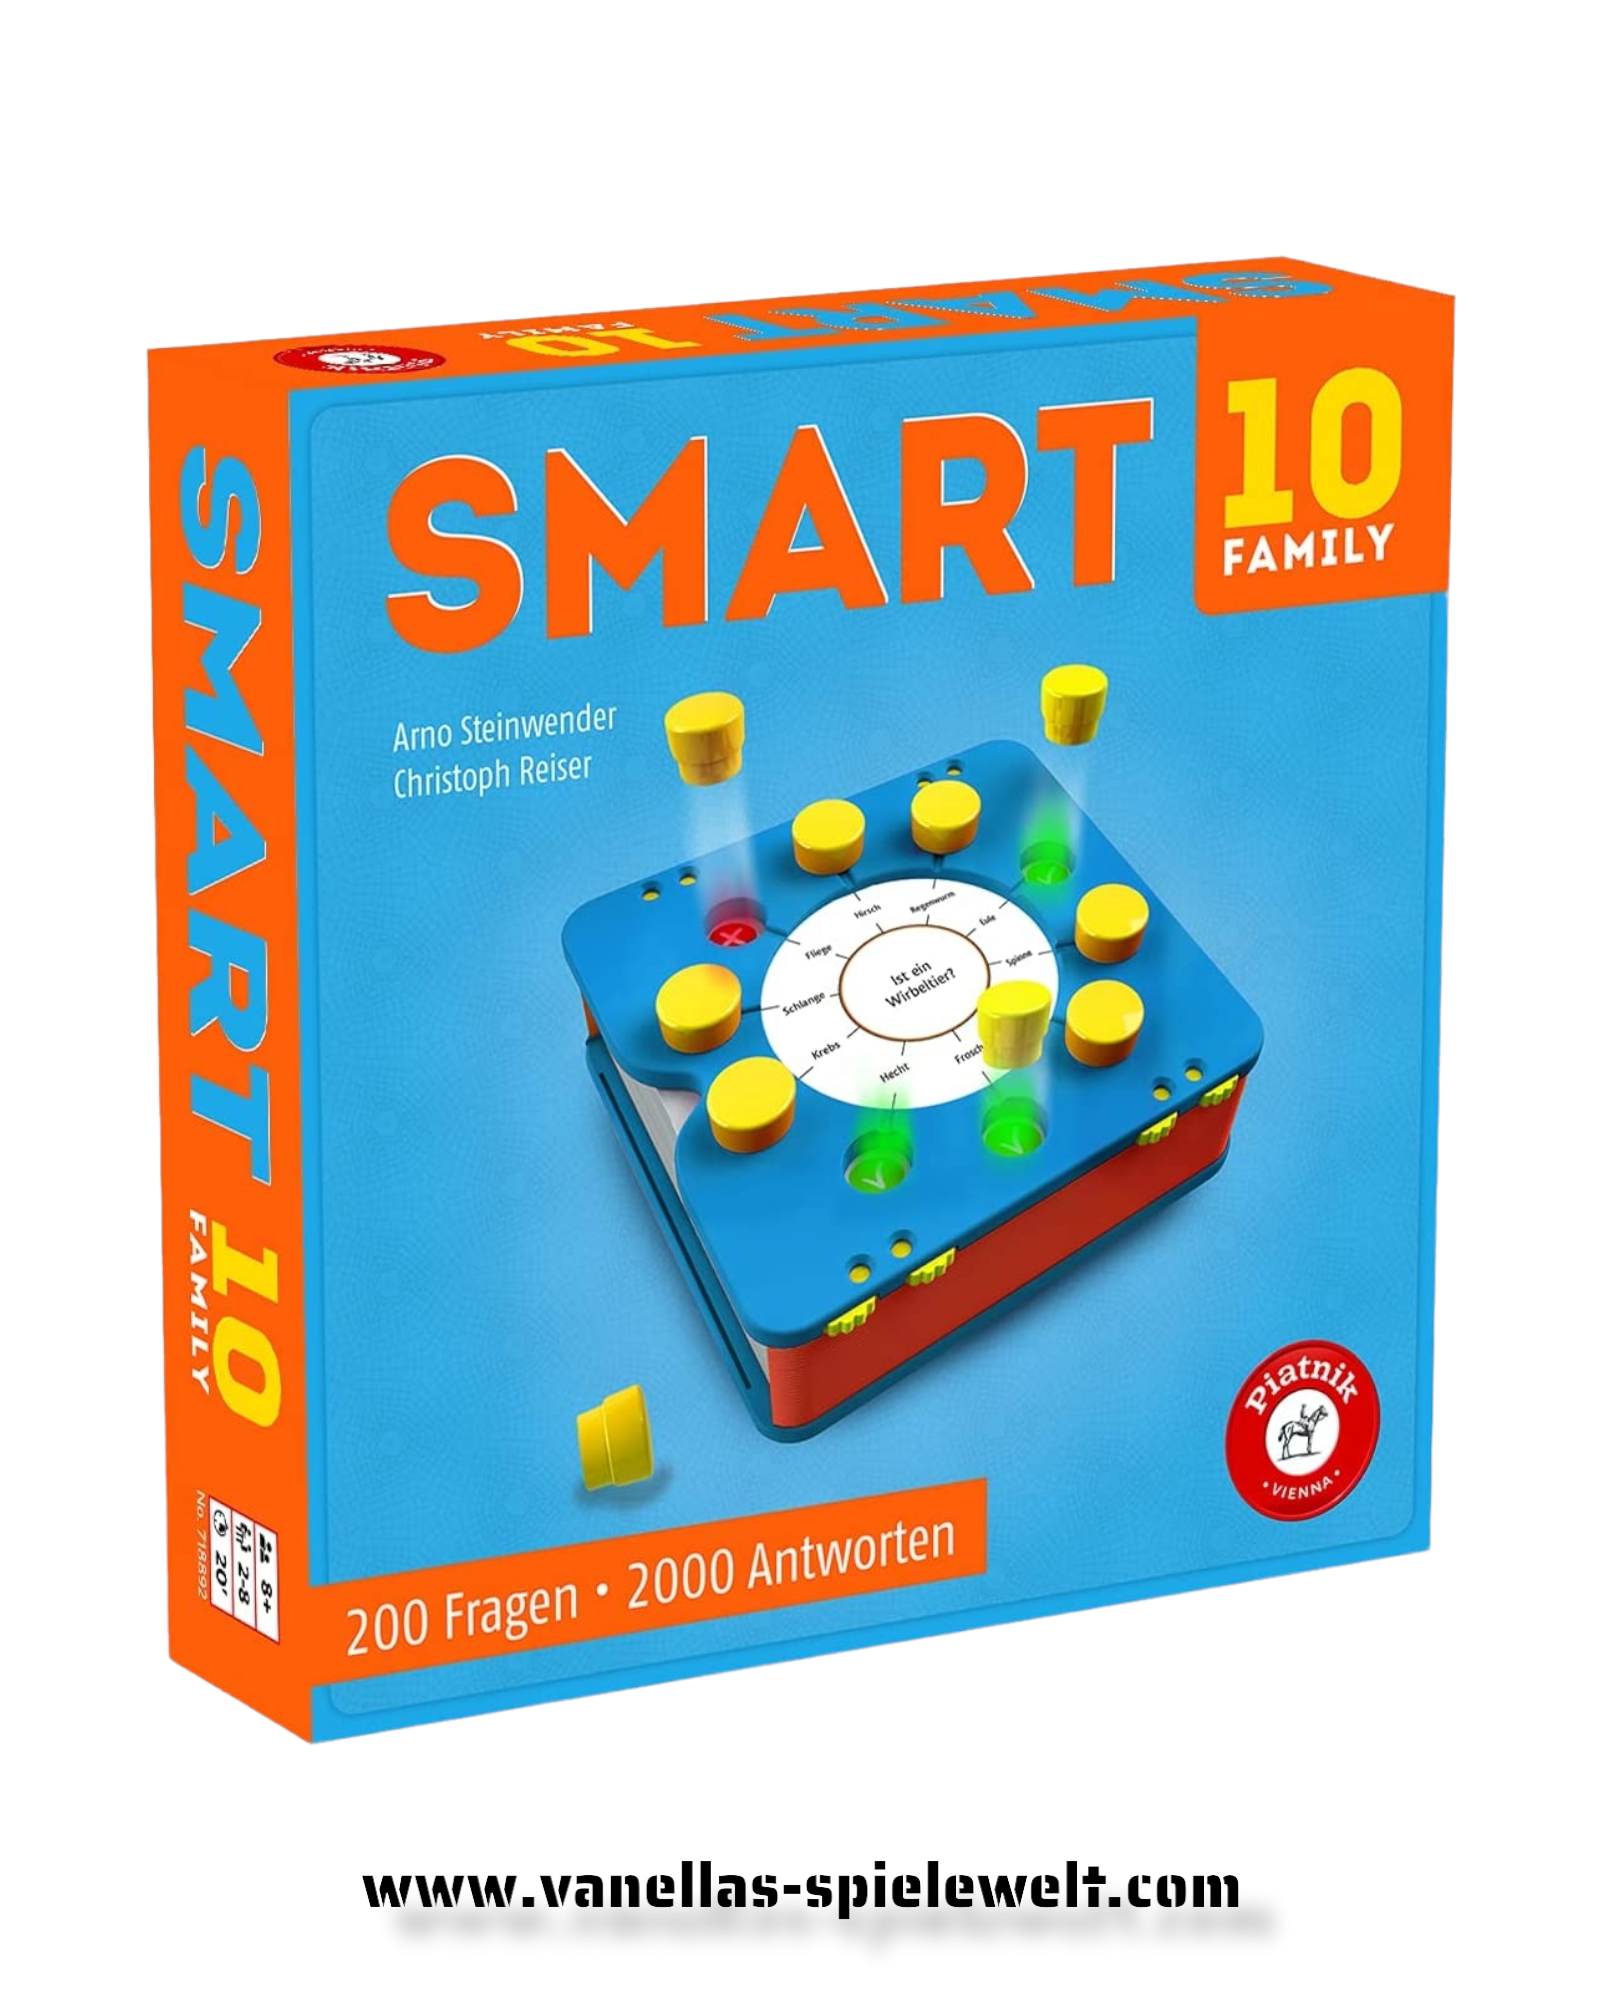 SMART 10 Family Vanellas Spielewelt